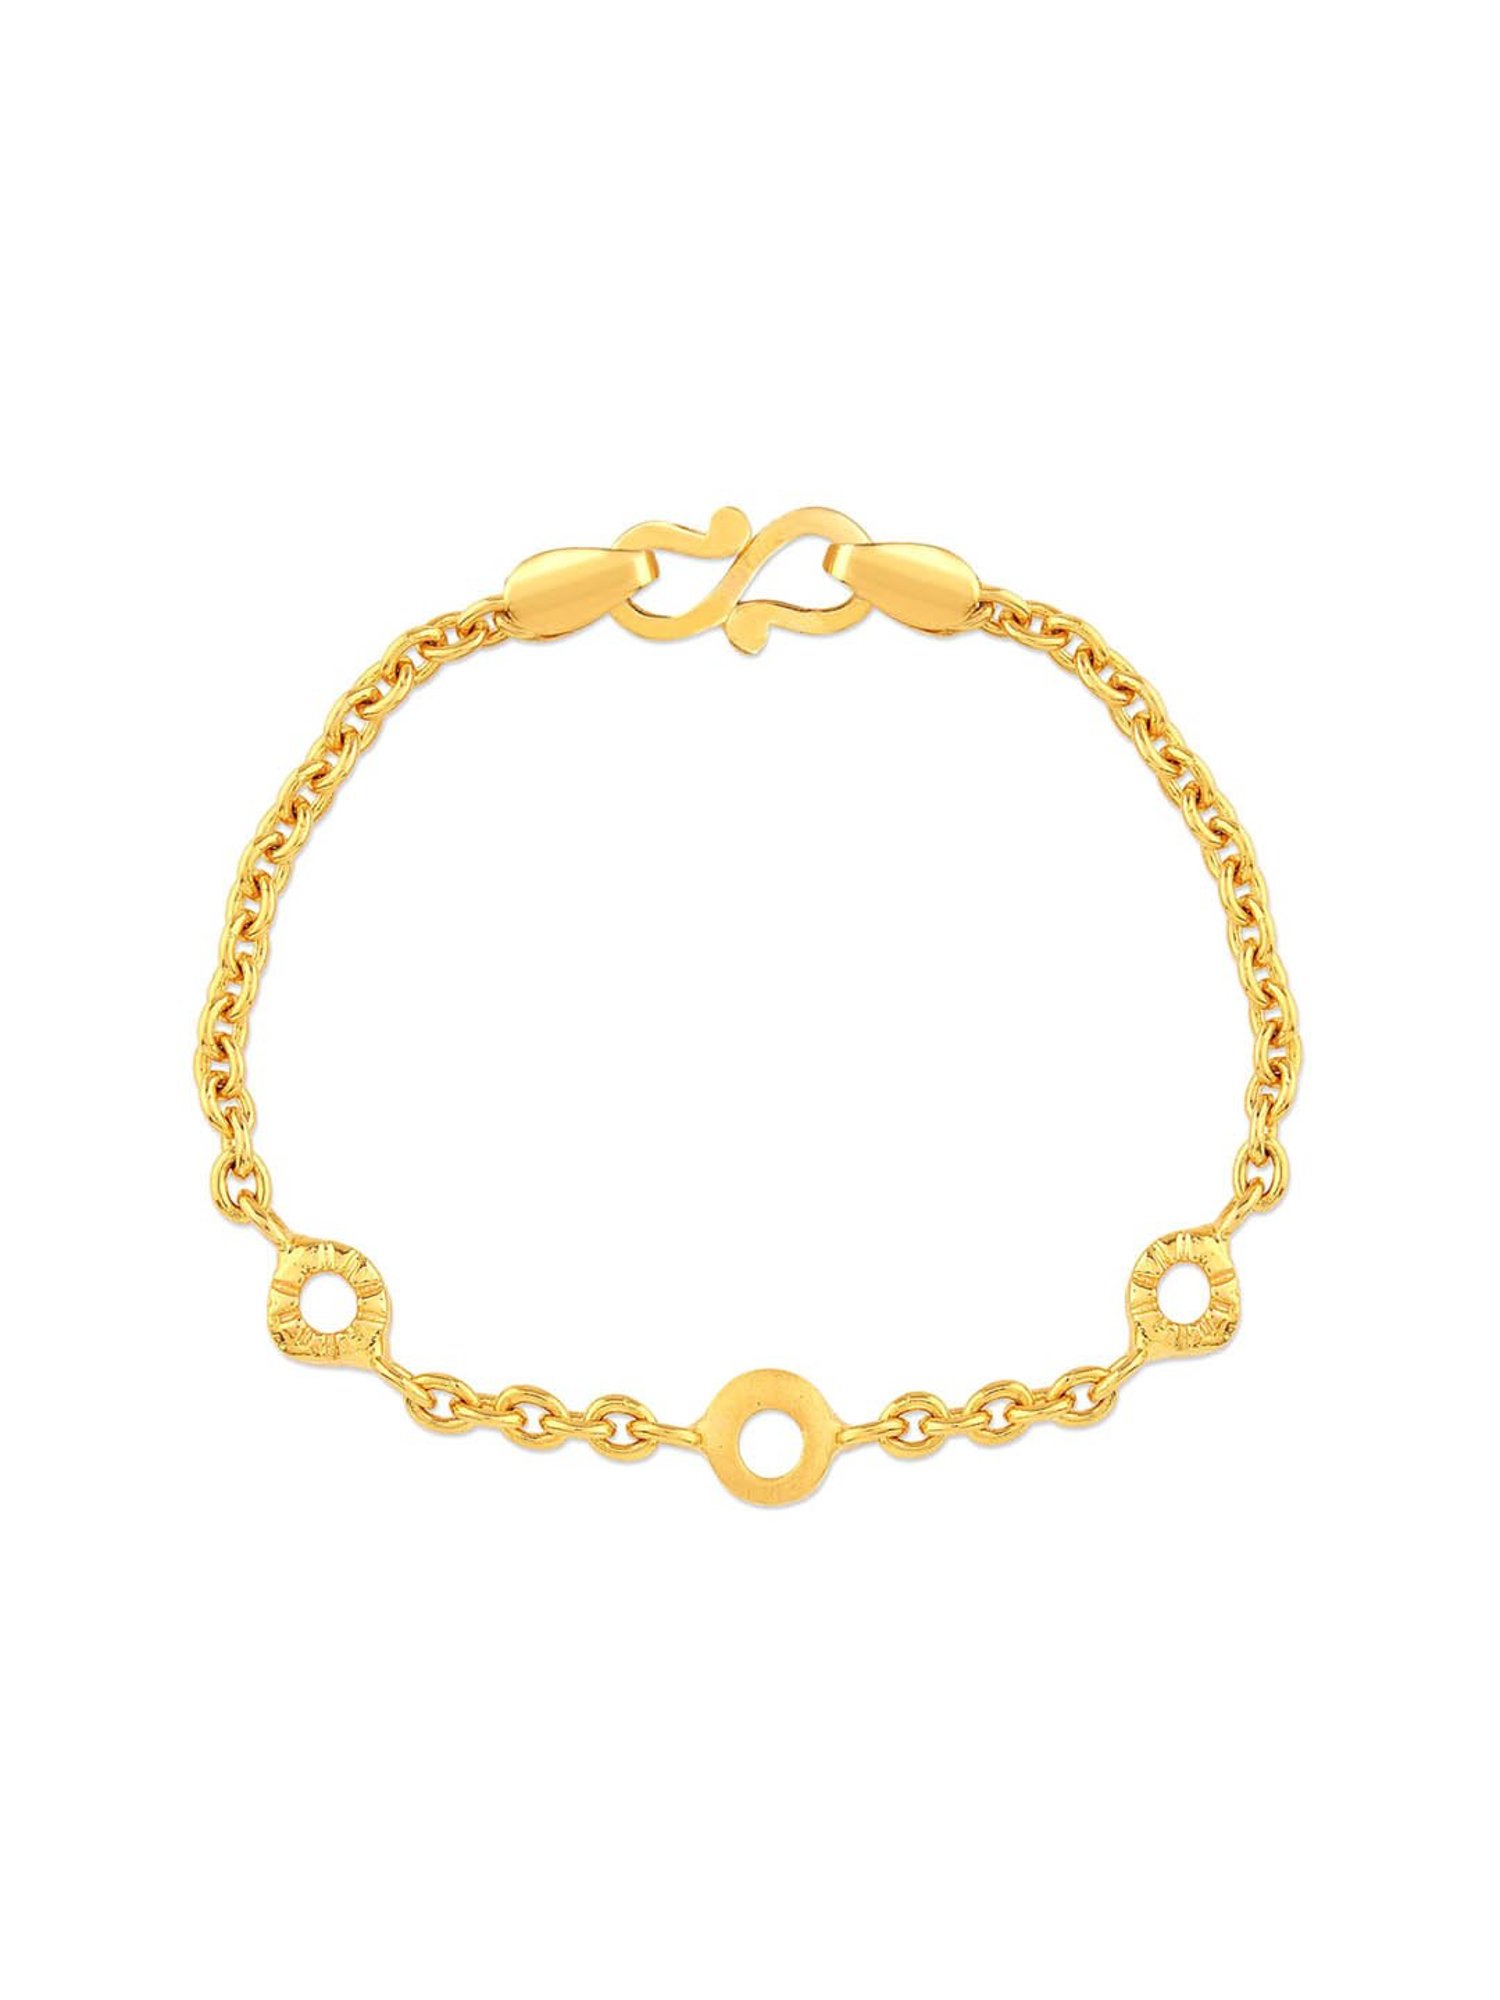 Buy Shimmering Gold Bracelet At Best Price | Karuri Jewellers